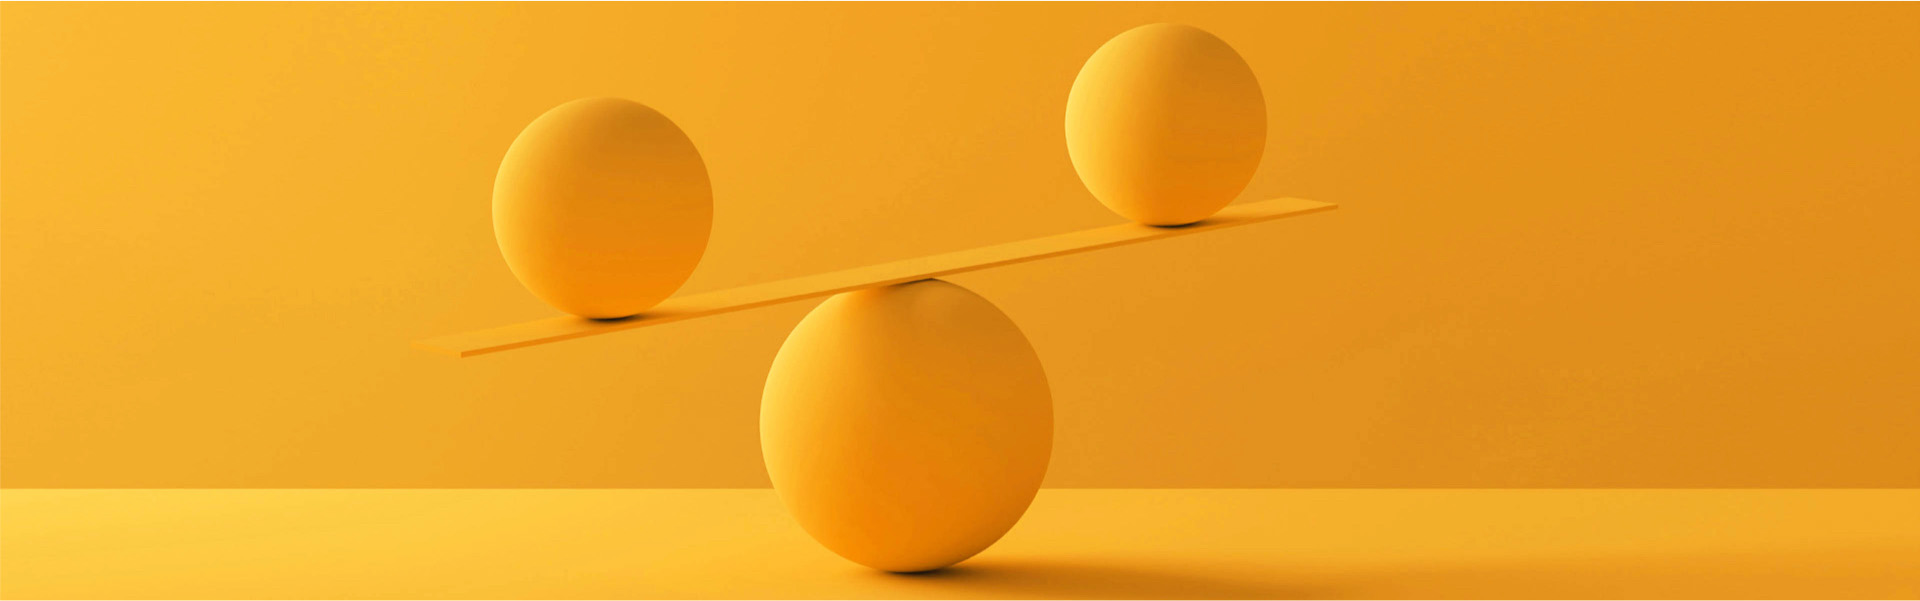 3D-rendering of two yellow spheres balancing